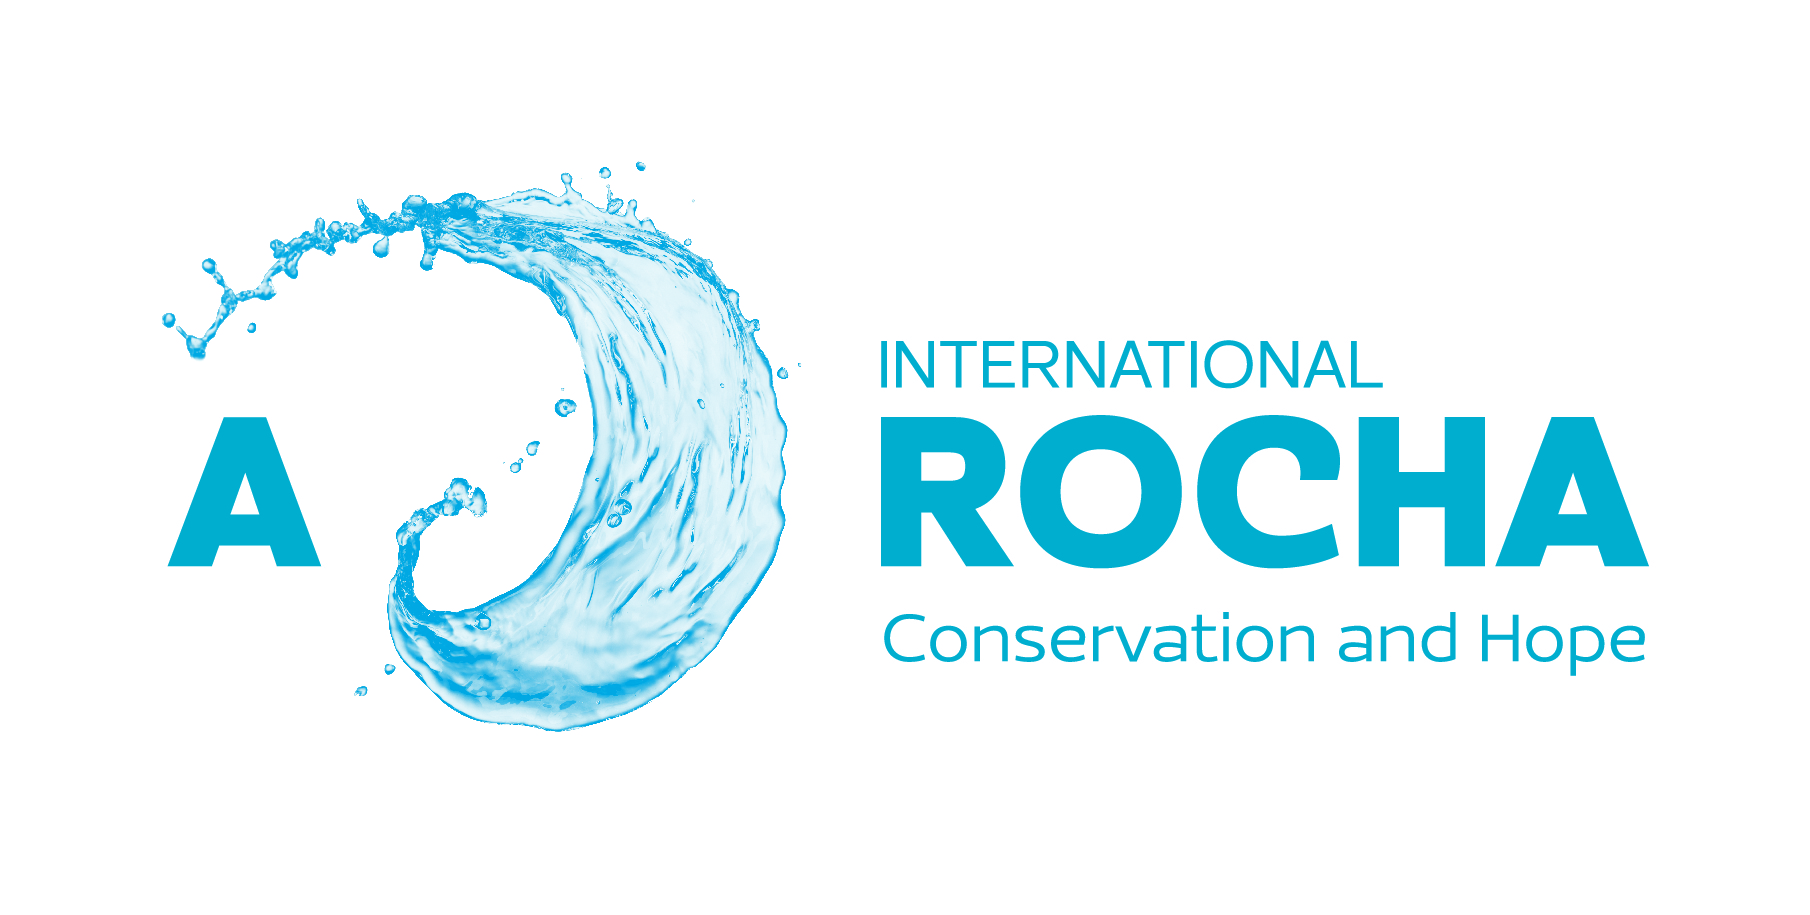 SDG 14 - A Rocha wave logo blue.jpg